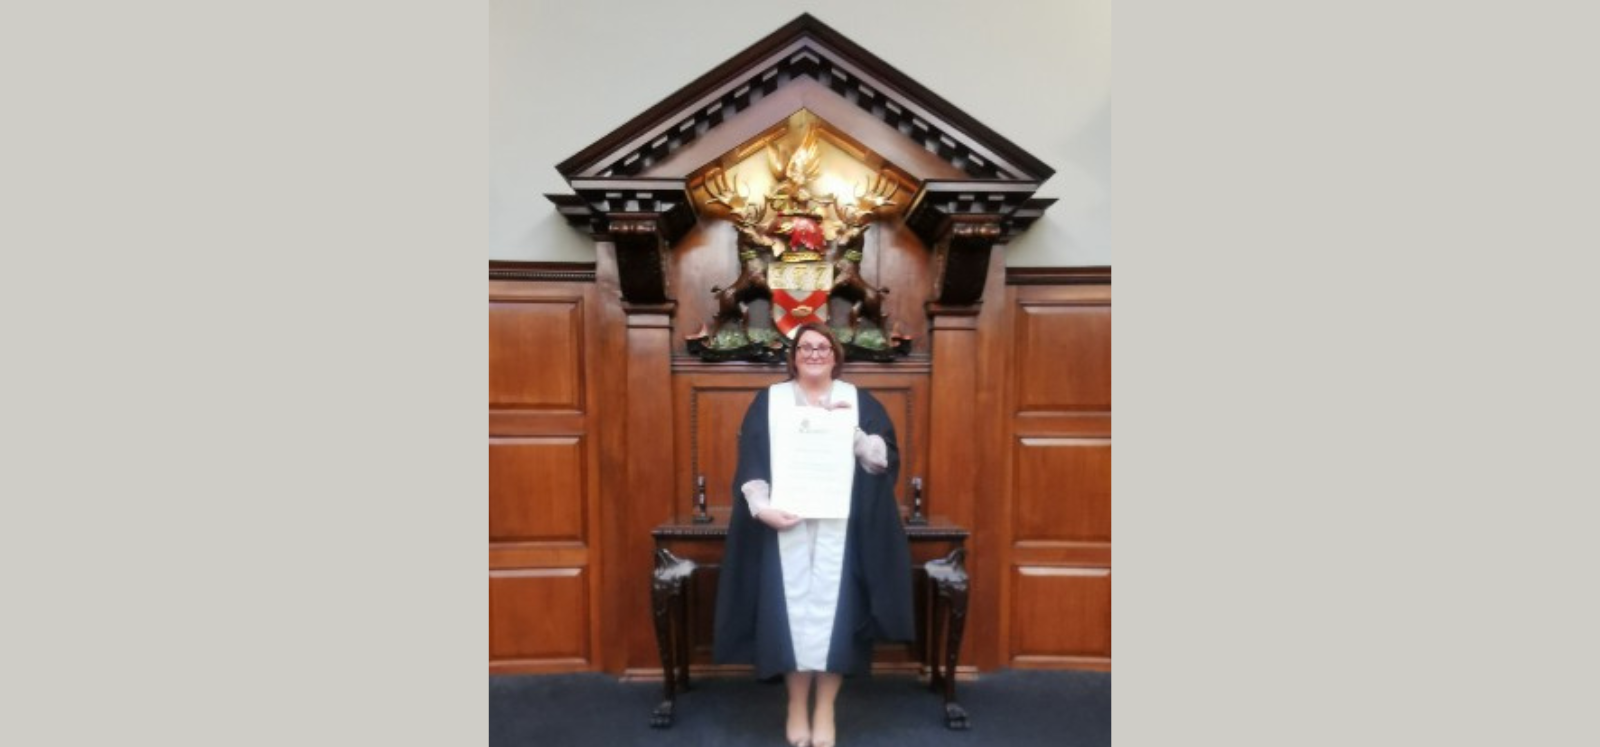 Professor Joanne Reid has receiving a Royal College of Surgeons Ireland Fellowship Ad Eundem